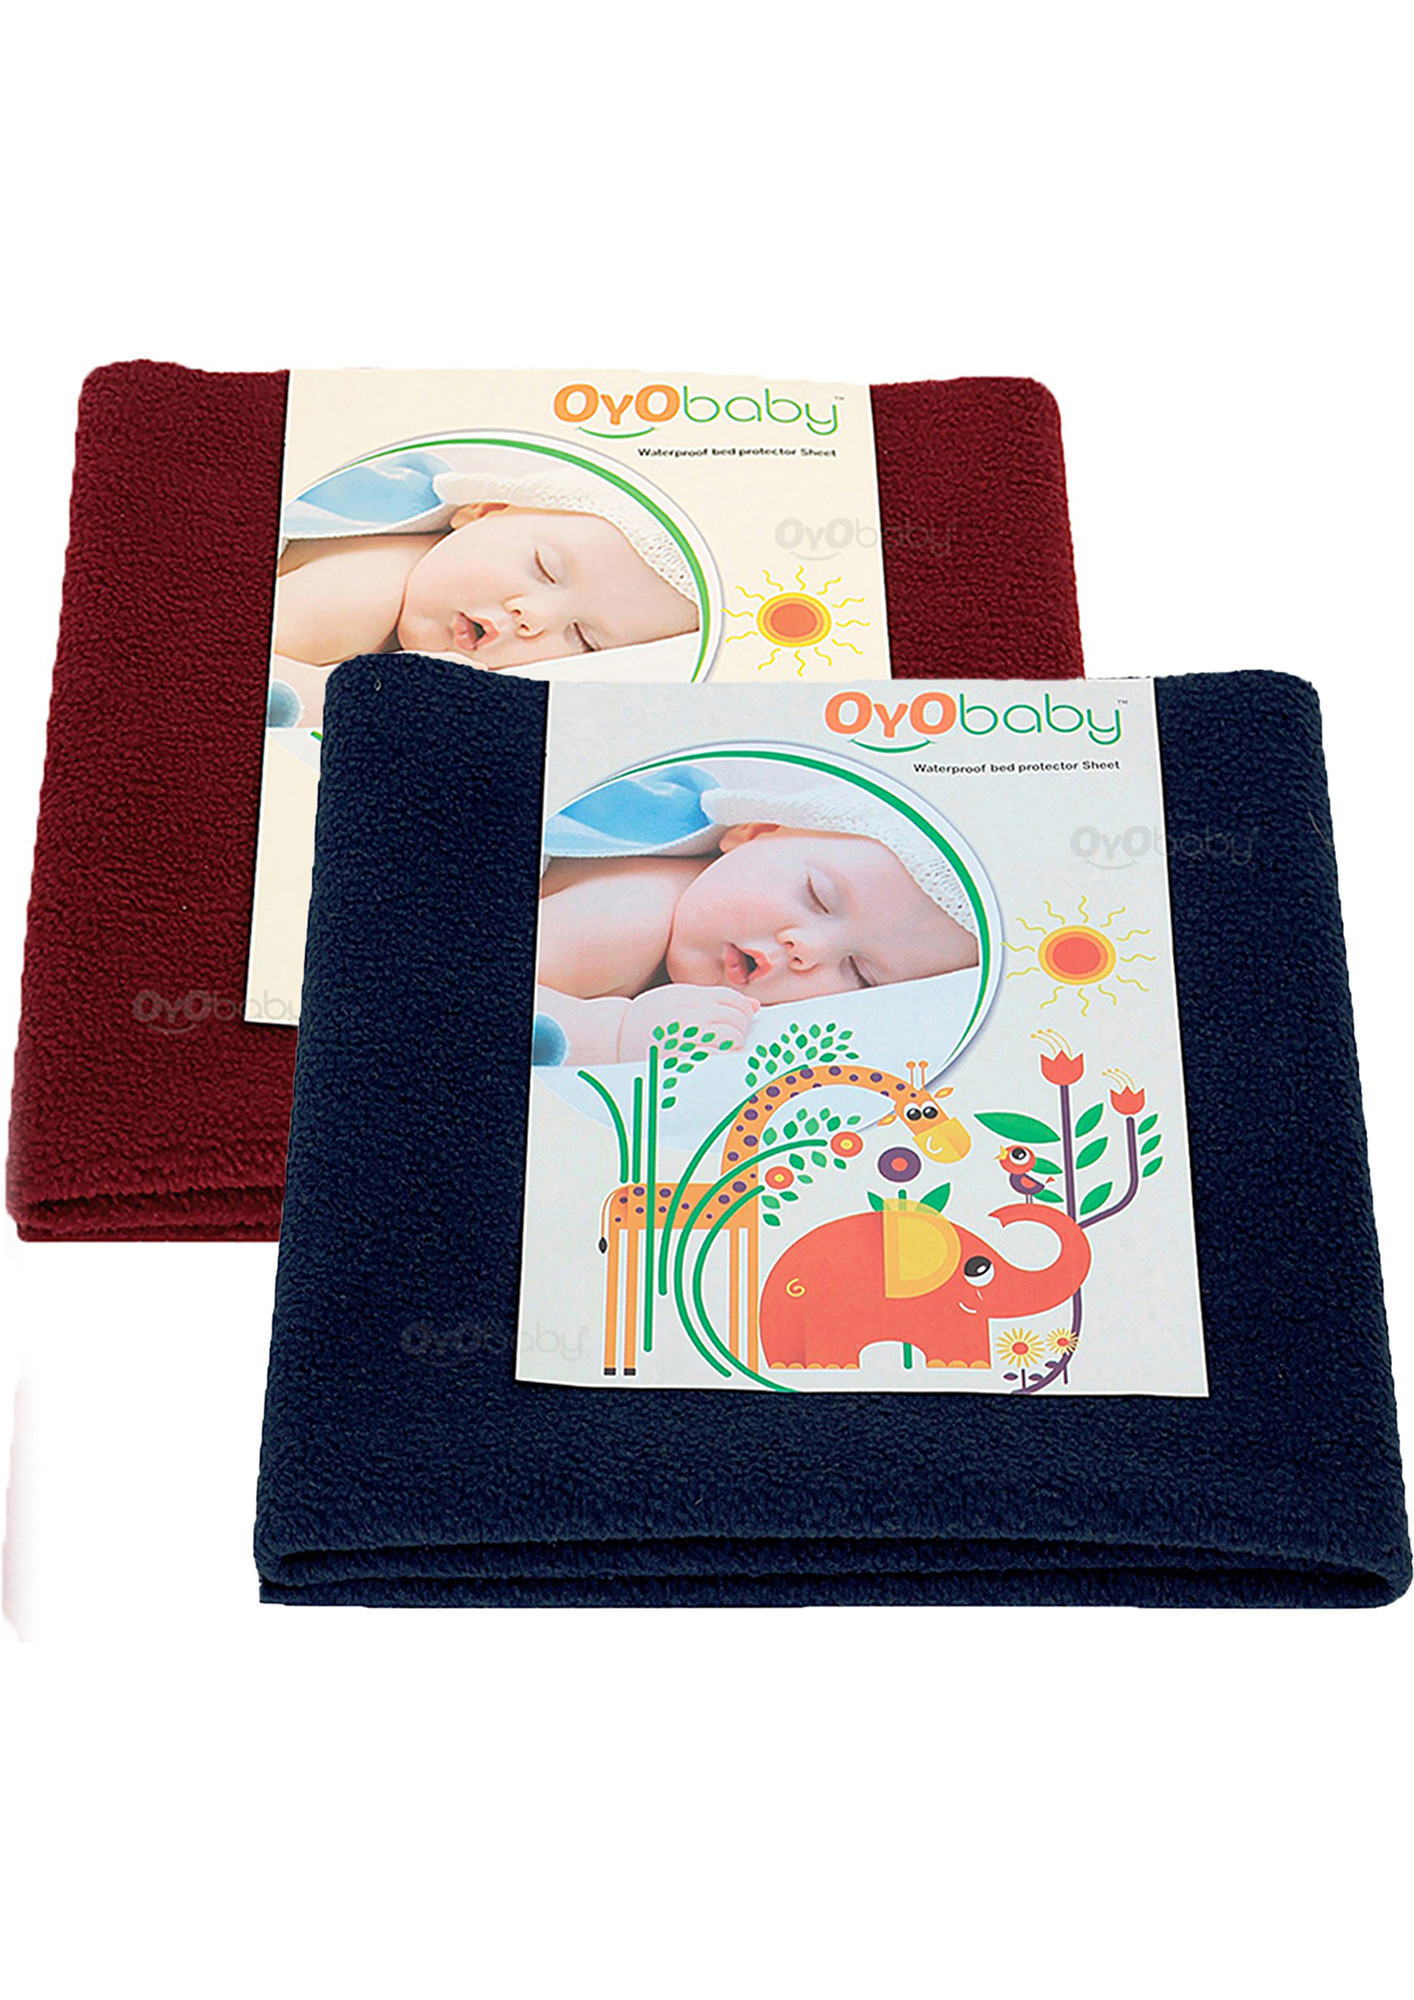 Oyo Baby Baby Bed Protector Sheet, Baby Waterproof Sheet, Baby Dry Sheet Pack Of 2 (Dark Blue, Maroon)-OB-2000-DB+M